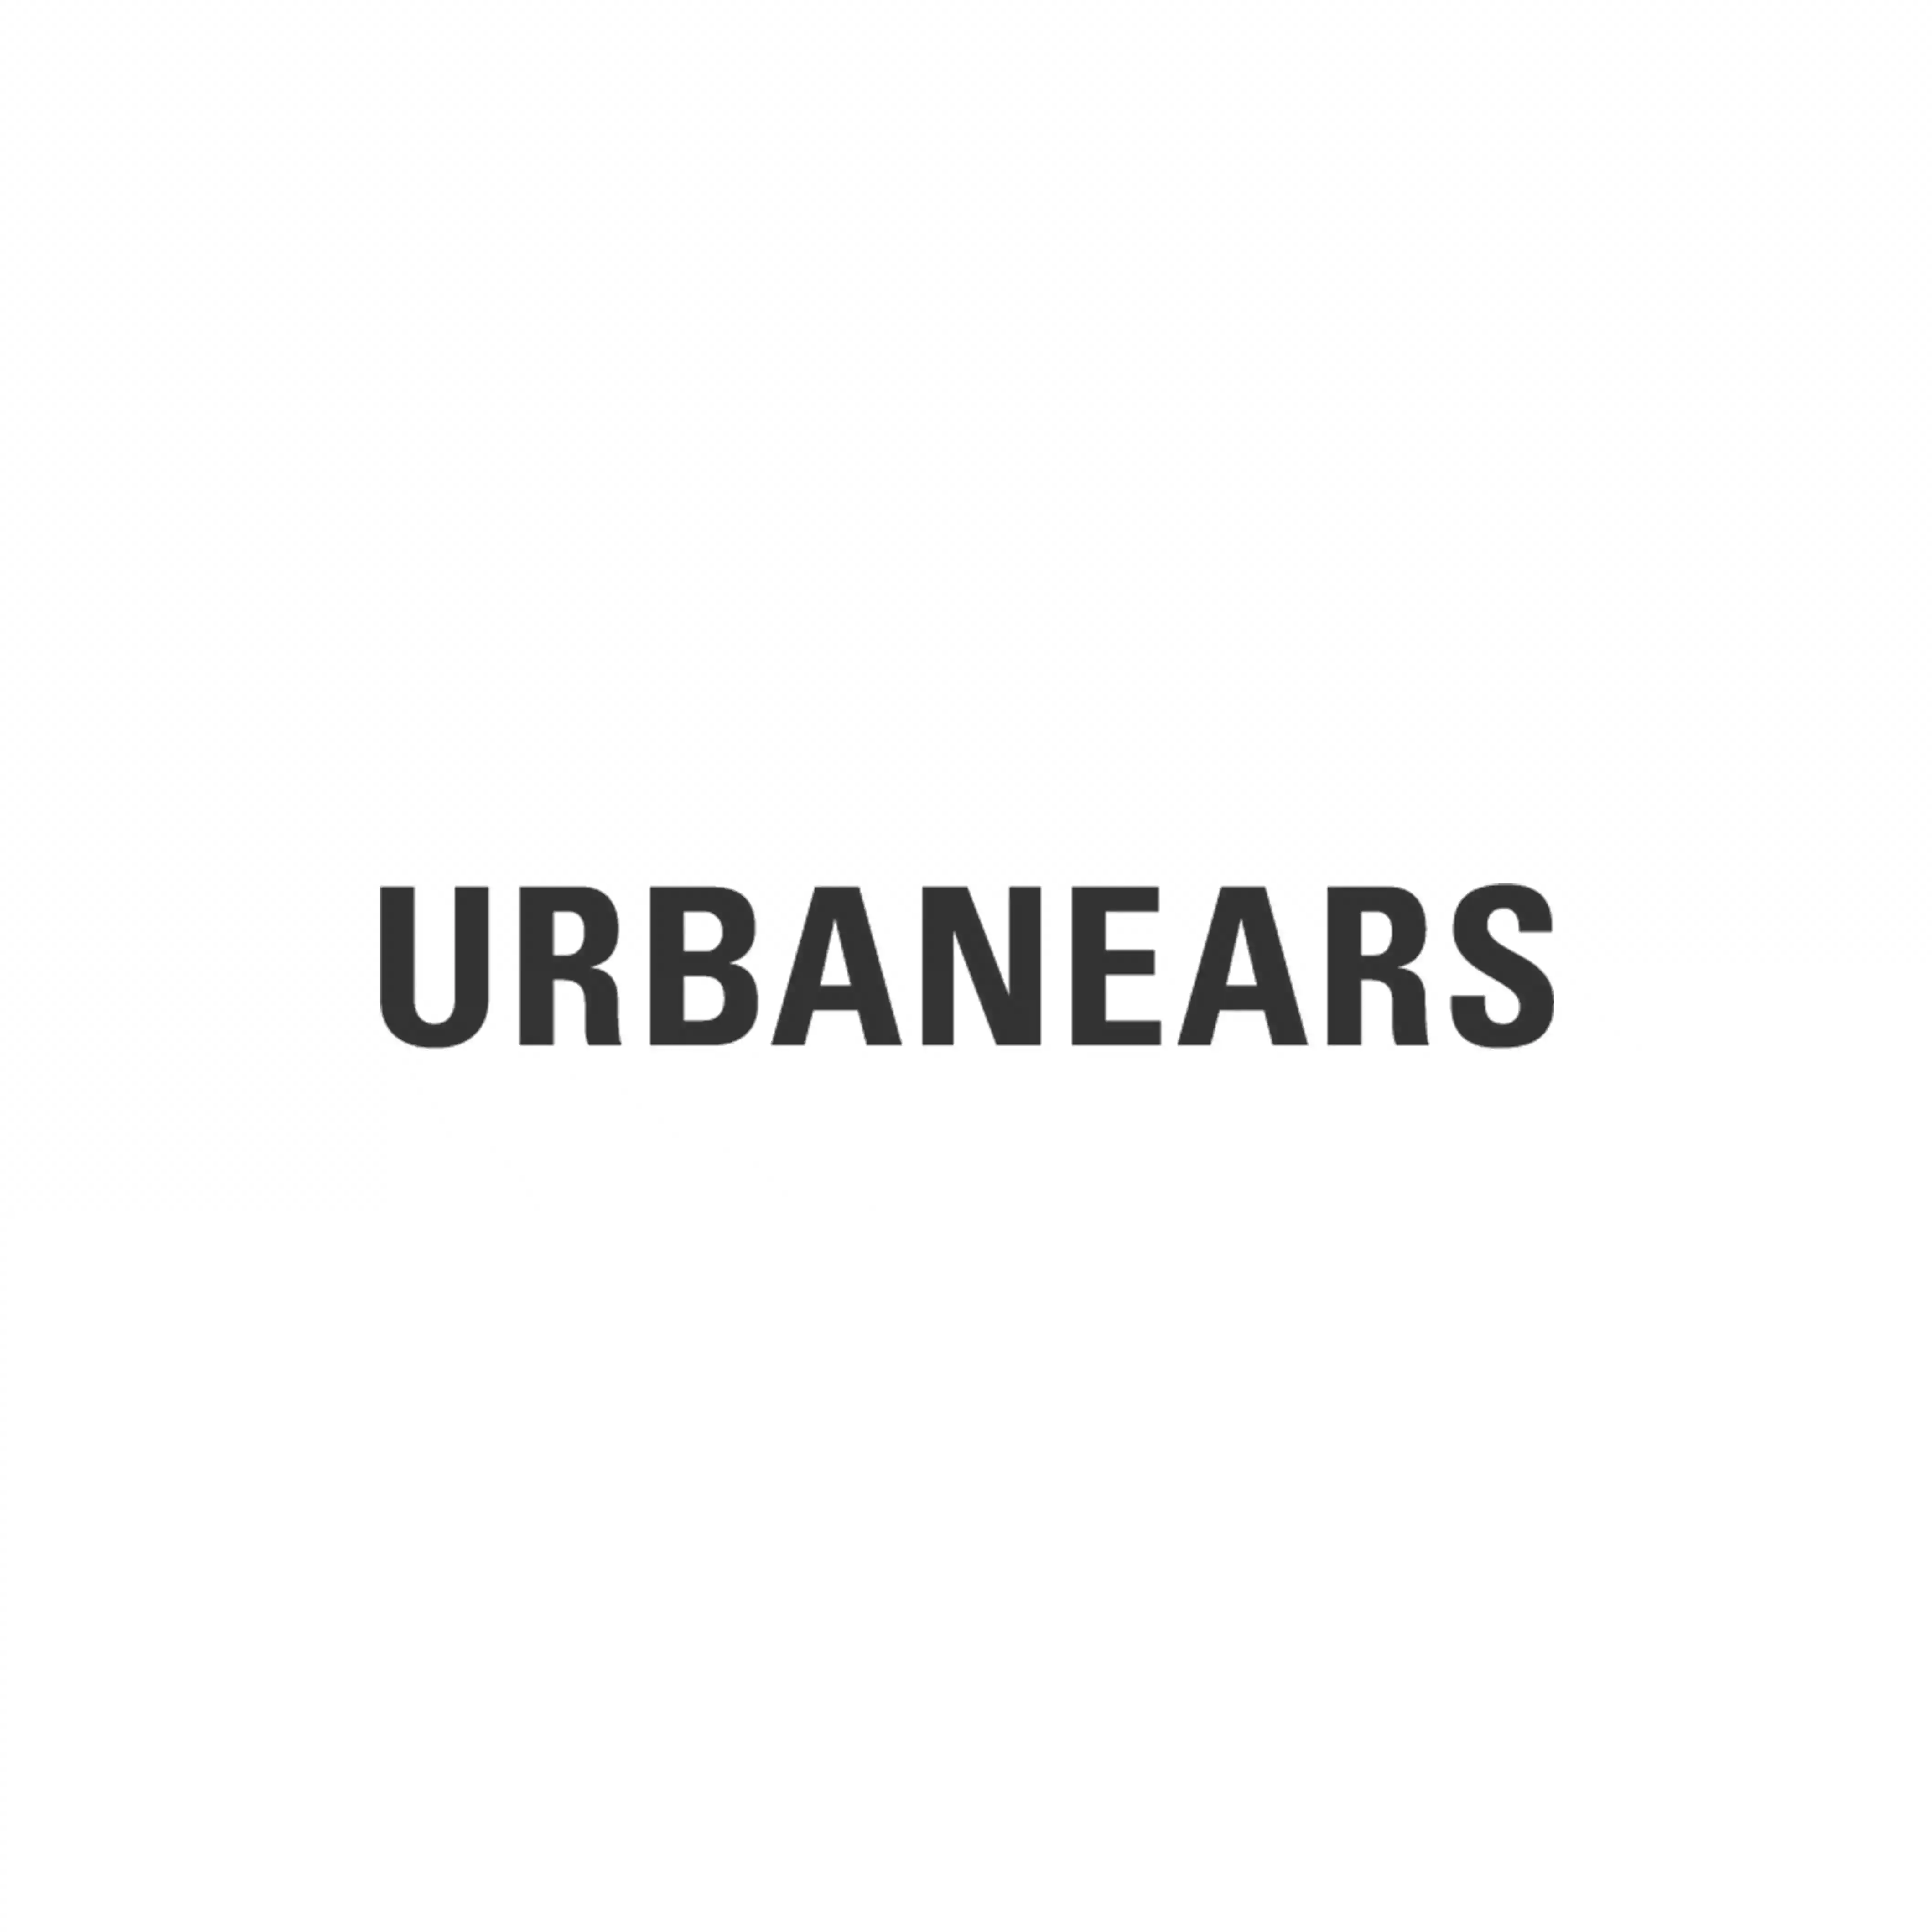 Urbanears discount codes